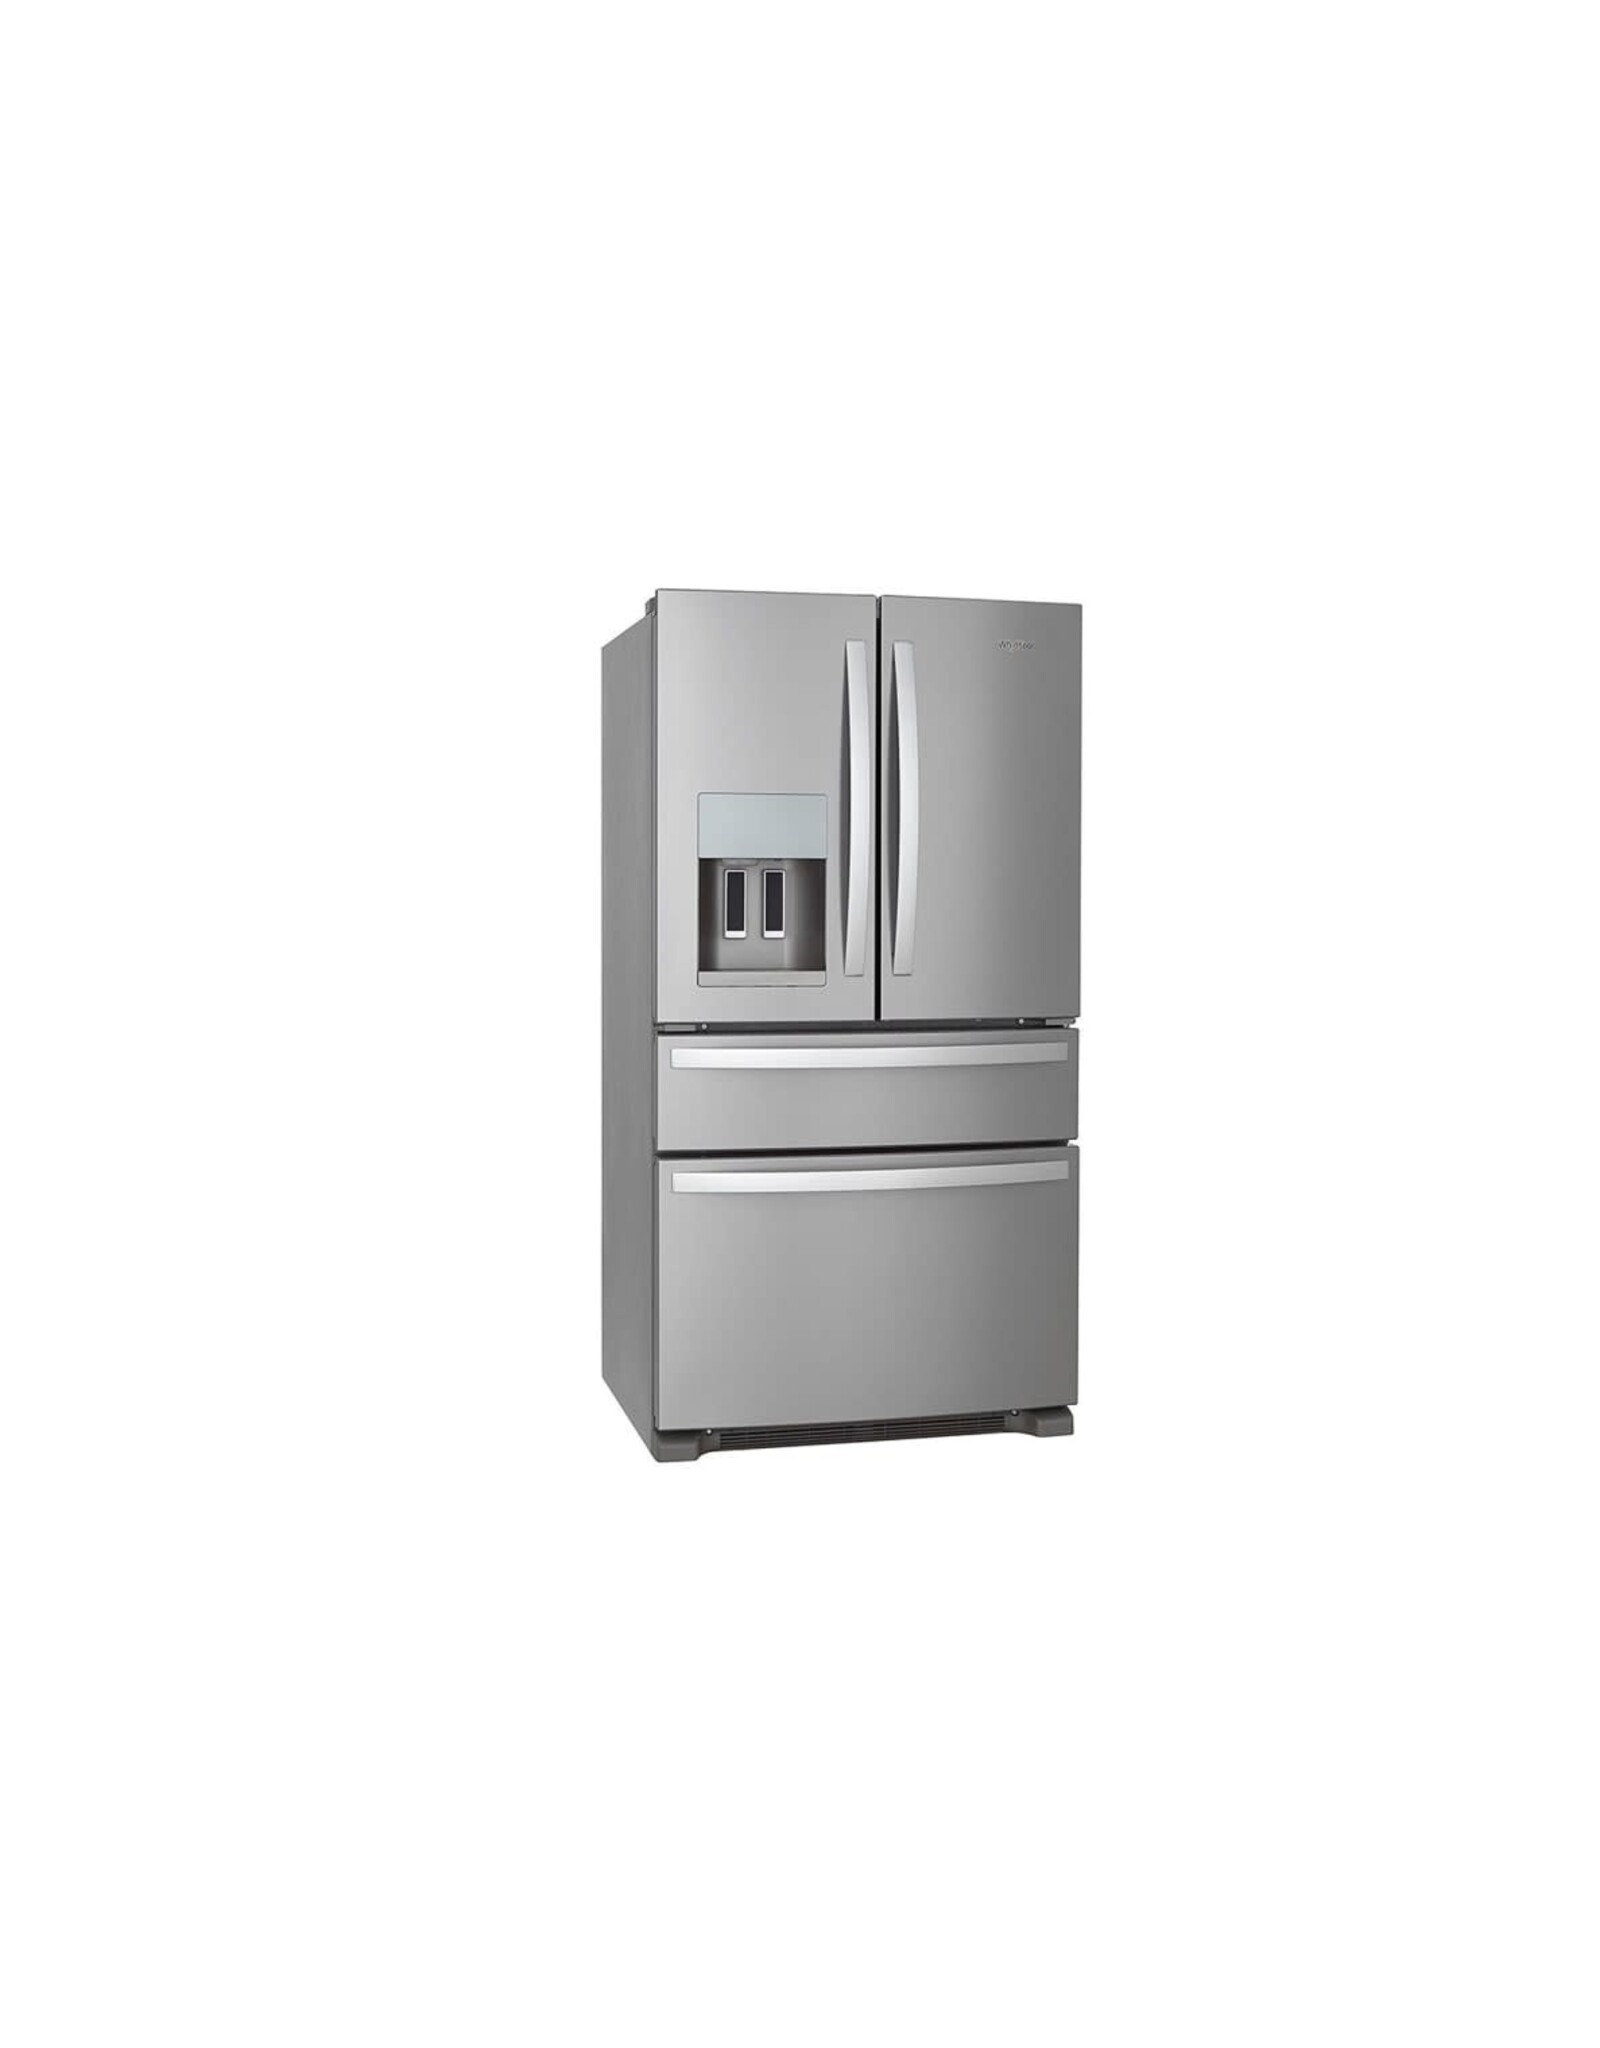 WHIRLPOOL WRX735SDHZ 25 cu. ft. French Door Refrigerator in Fingerprint Resistant Stainless Steel